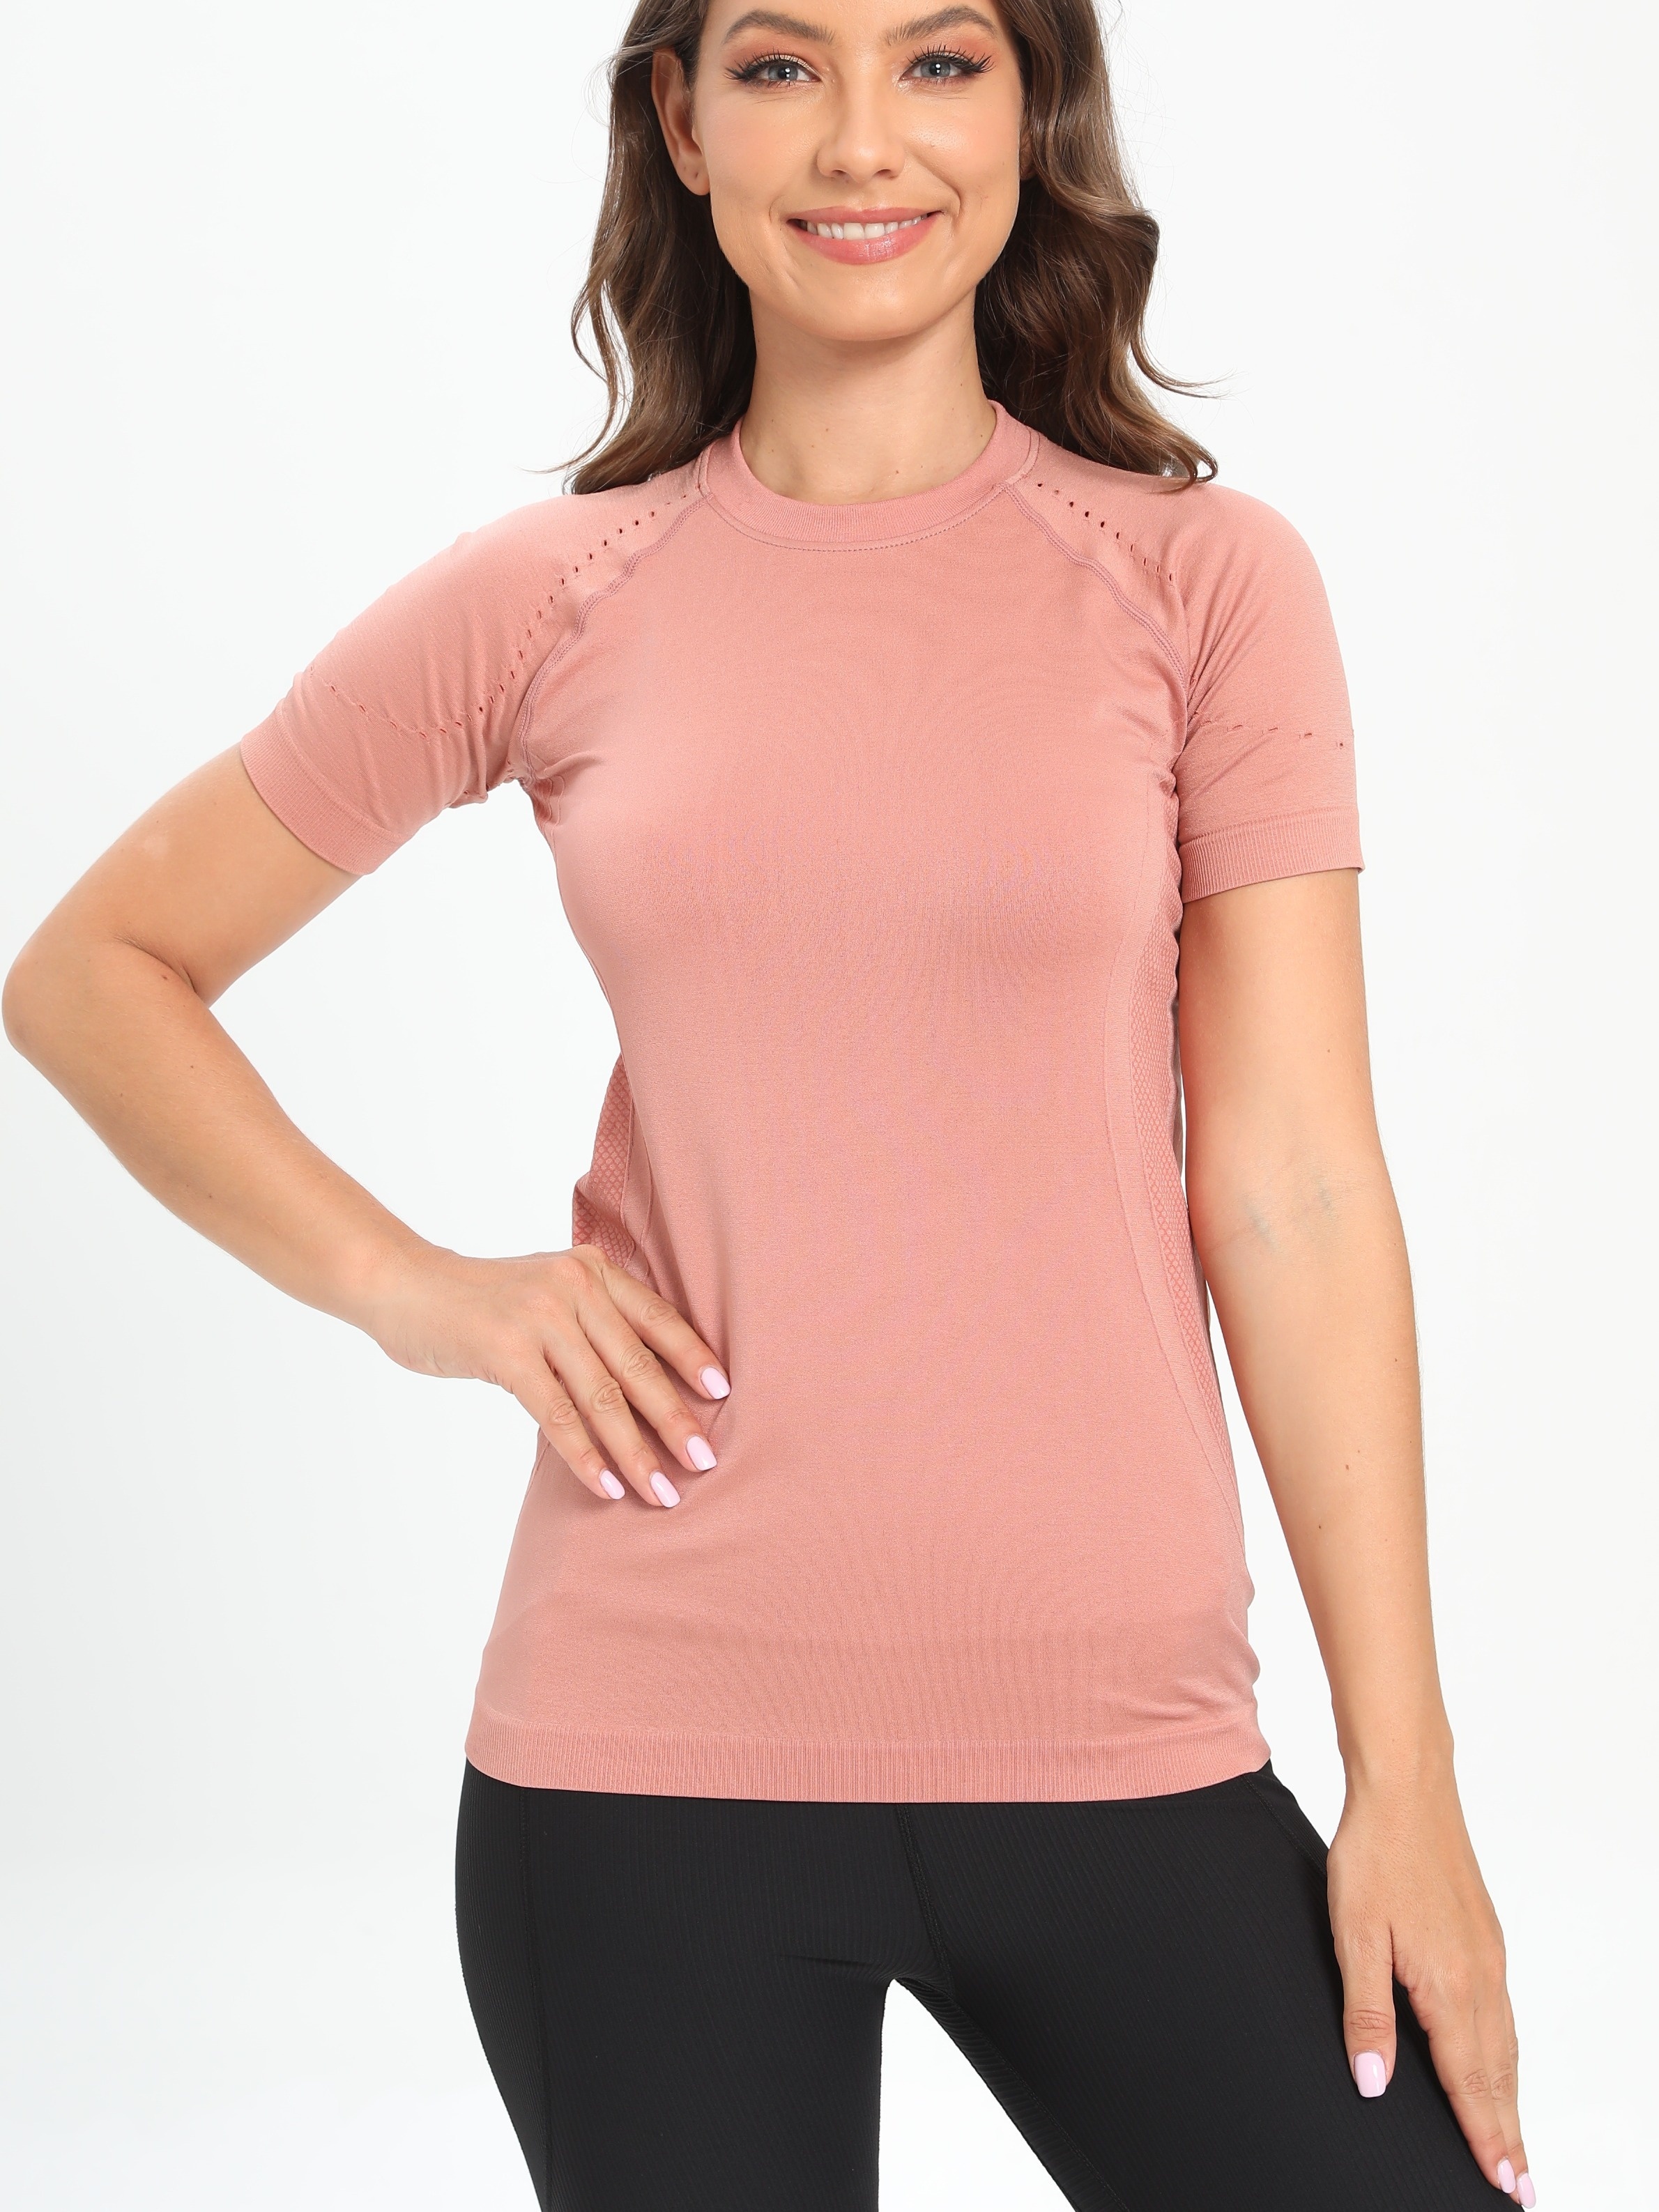 Women Slim Petite Yoga Shirts Short Sleeve Activewear Mesh Splicing  Moisture Wicking Workout Running Tops (Black Short, S) : :  Clothing, Shoes & Accessories